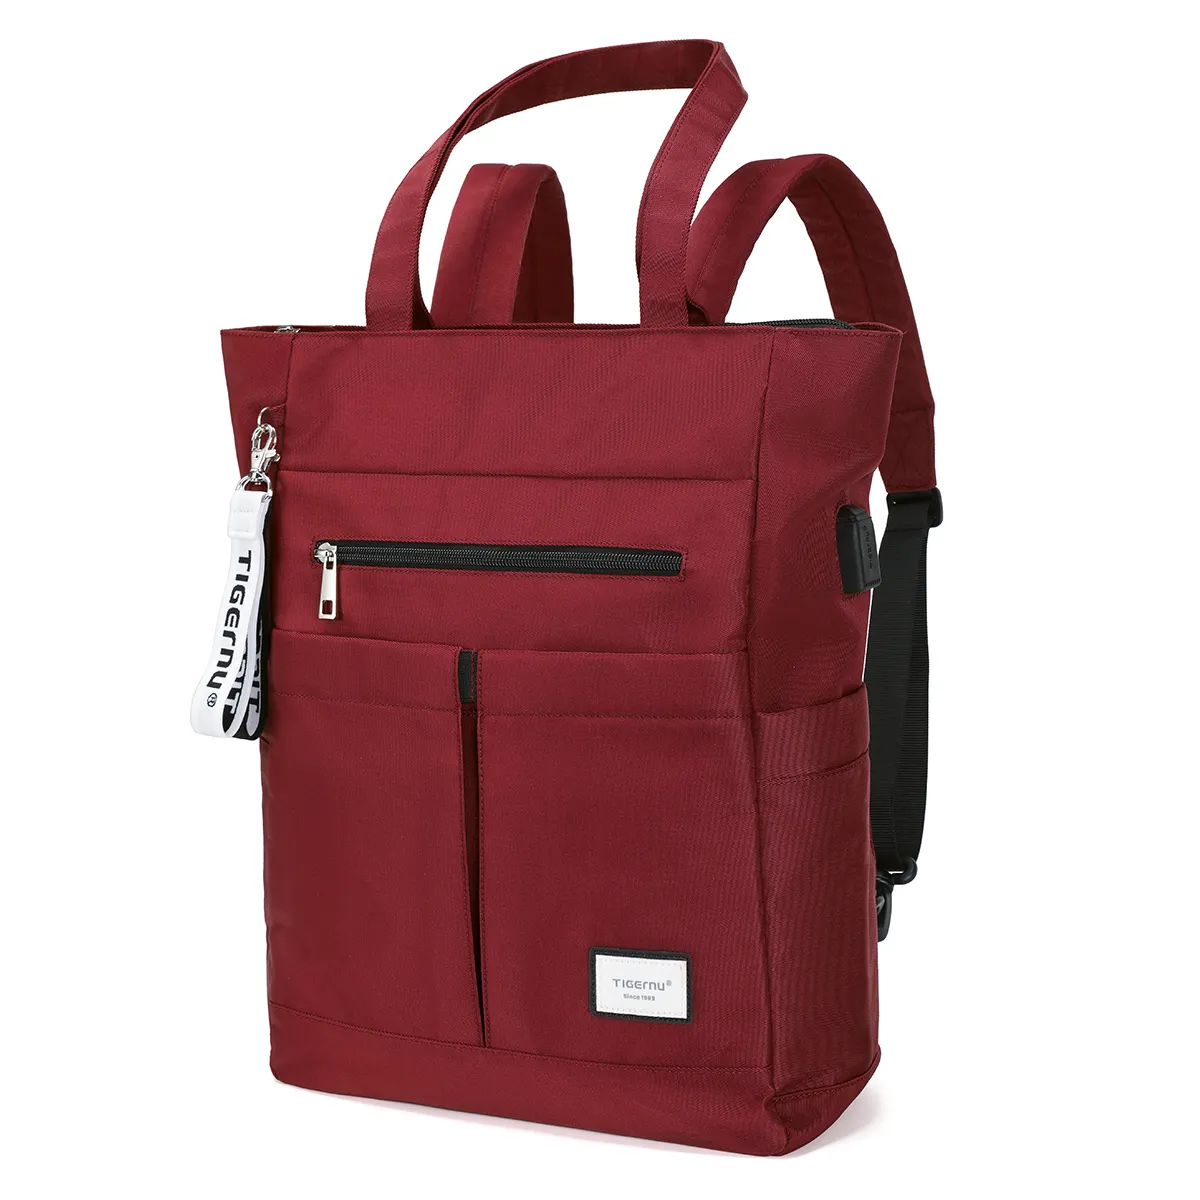 Tigernu T-S8632 Private Label Backpack Multifunctional Laptop Bag Mochilas Mujer Backpack For Women